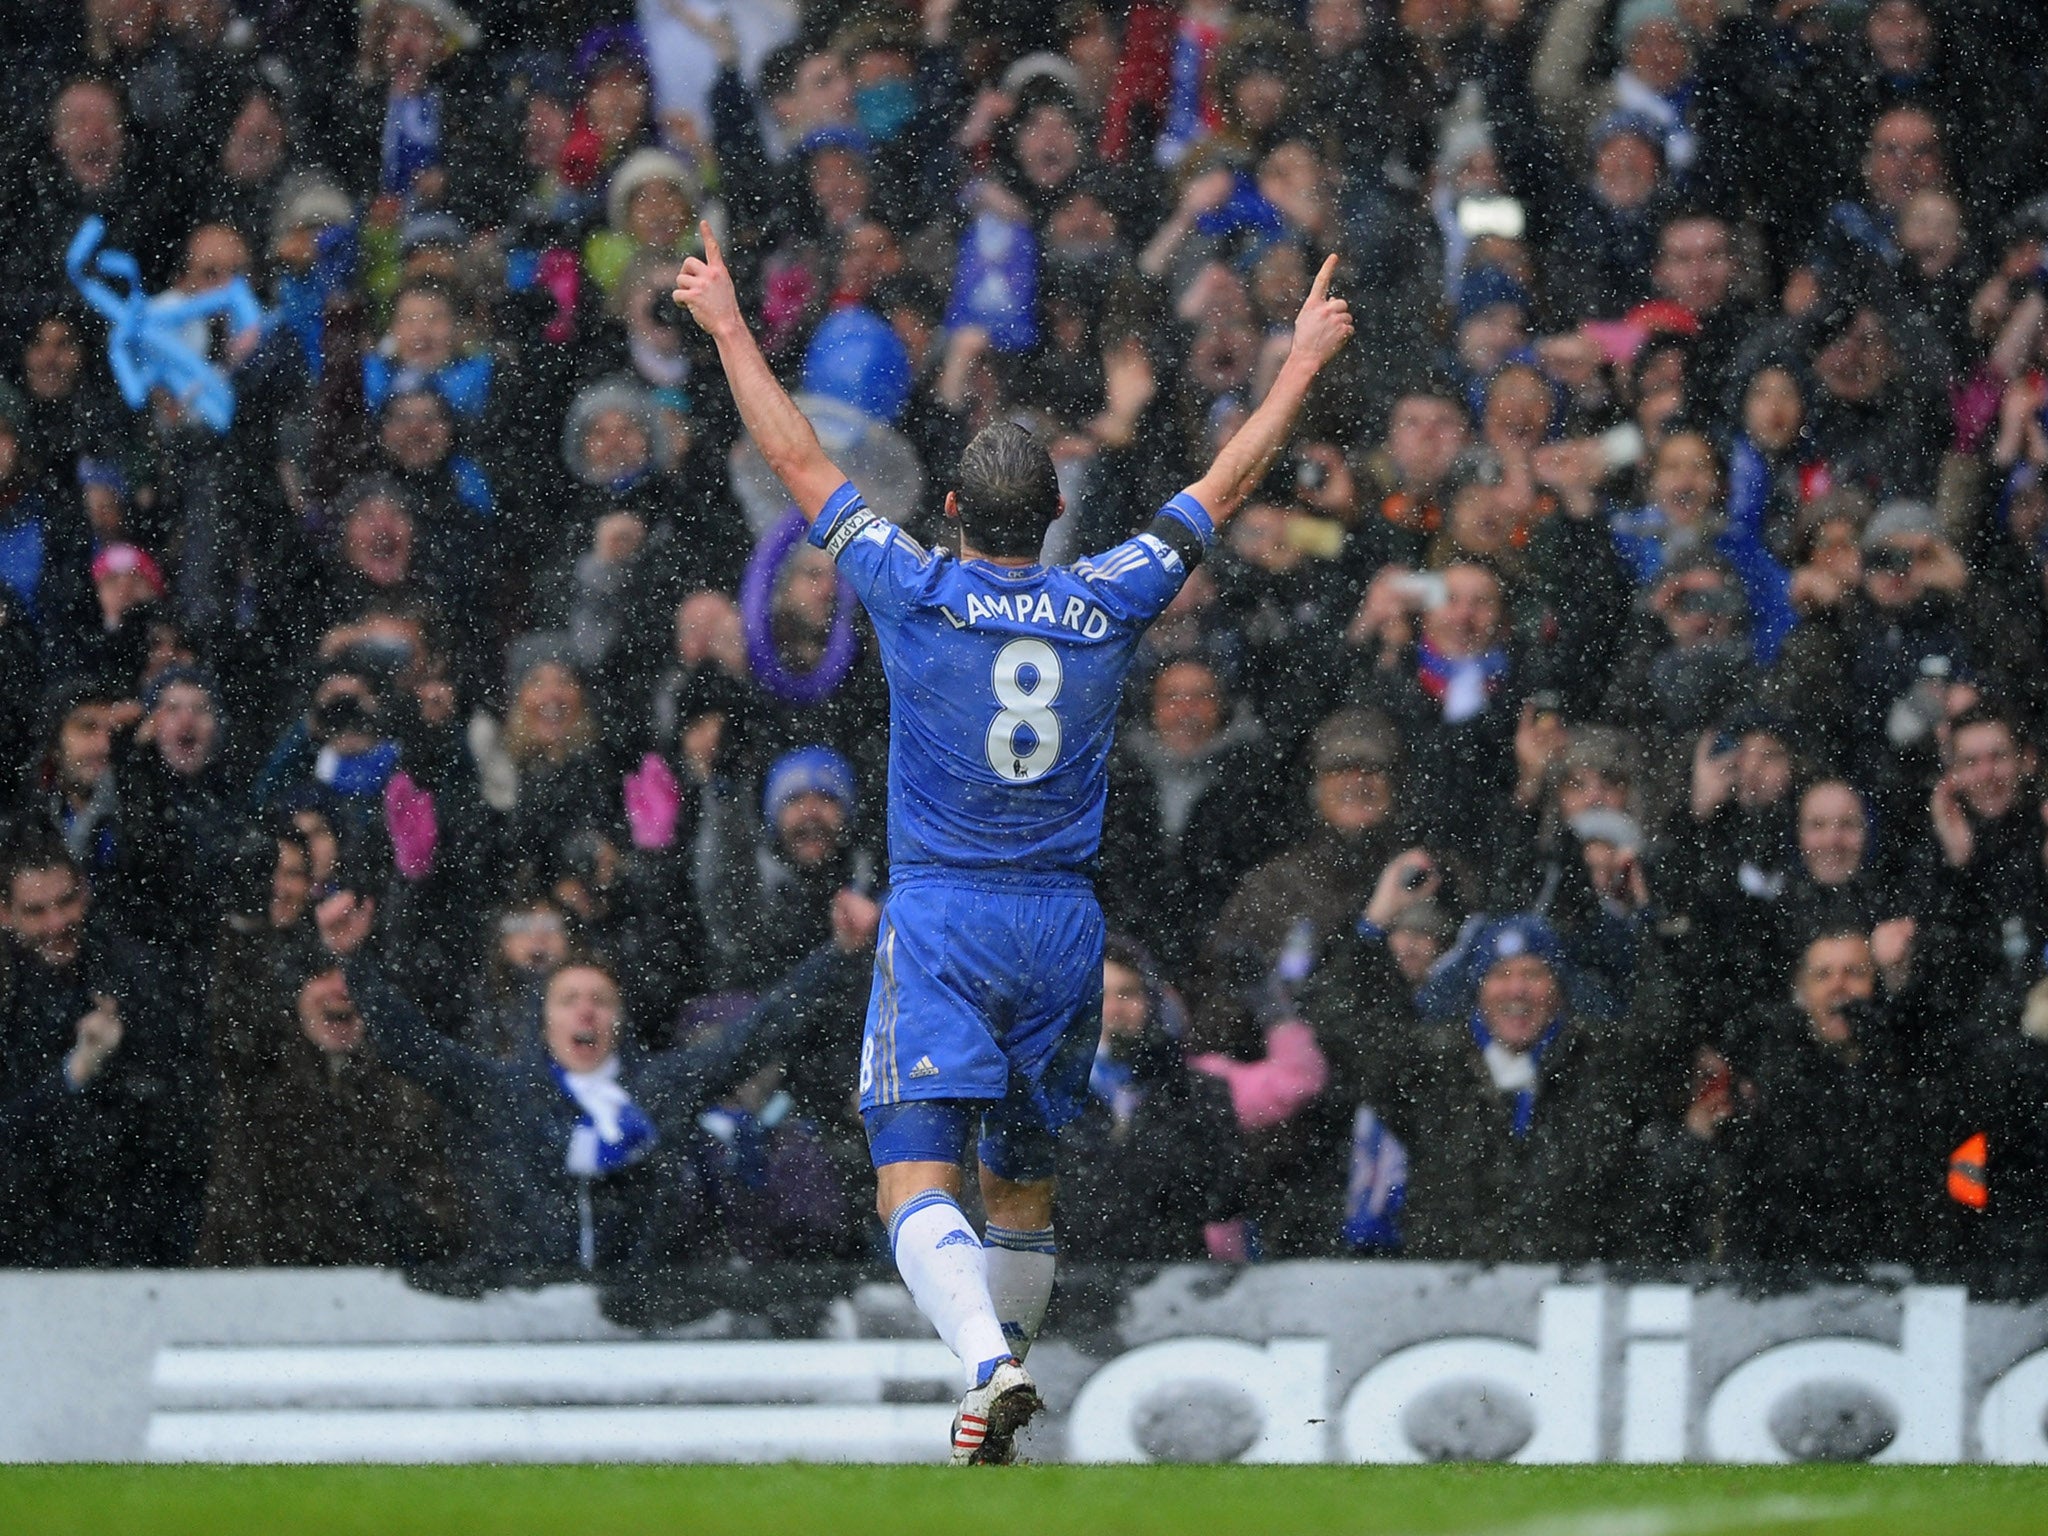 Frank Lampard celebrates scoring his penalty